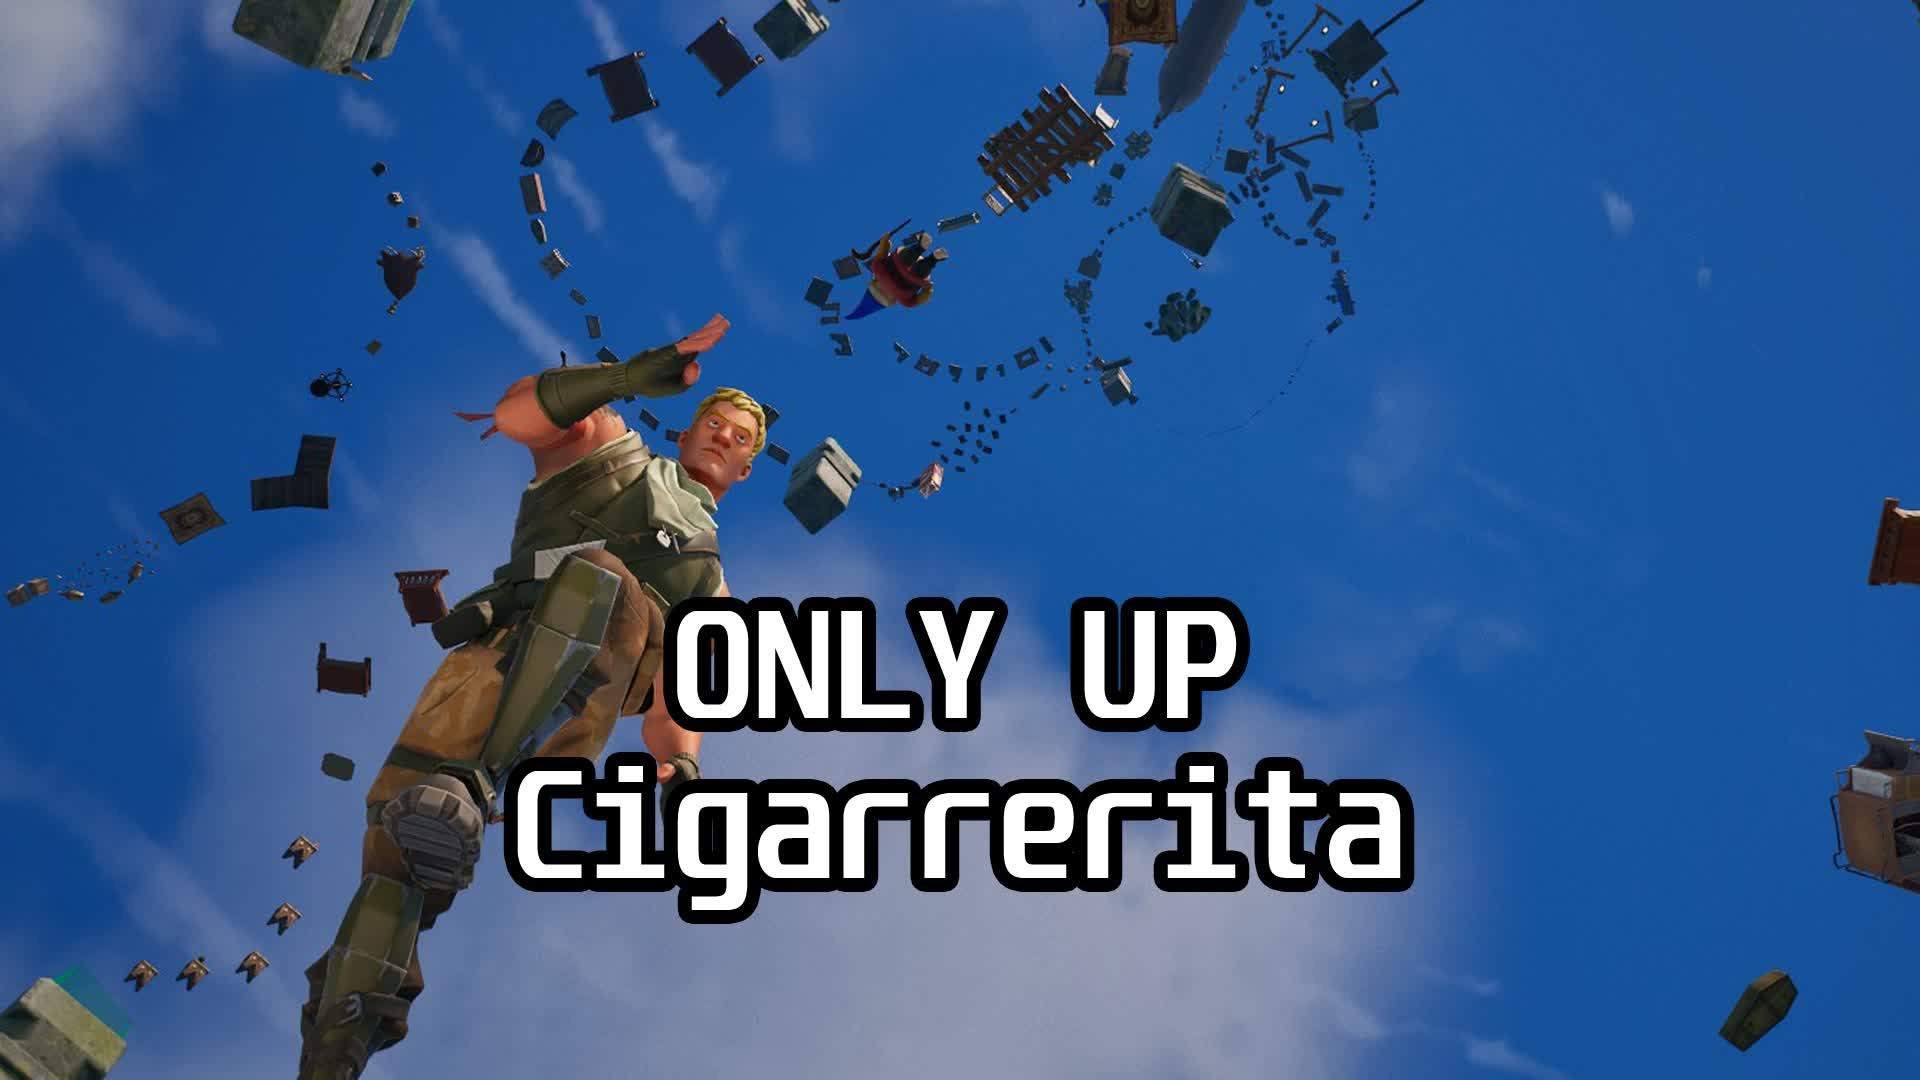 Only Up - Cigarrerita 2.3